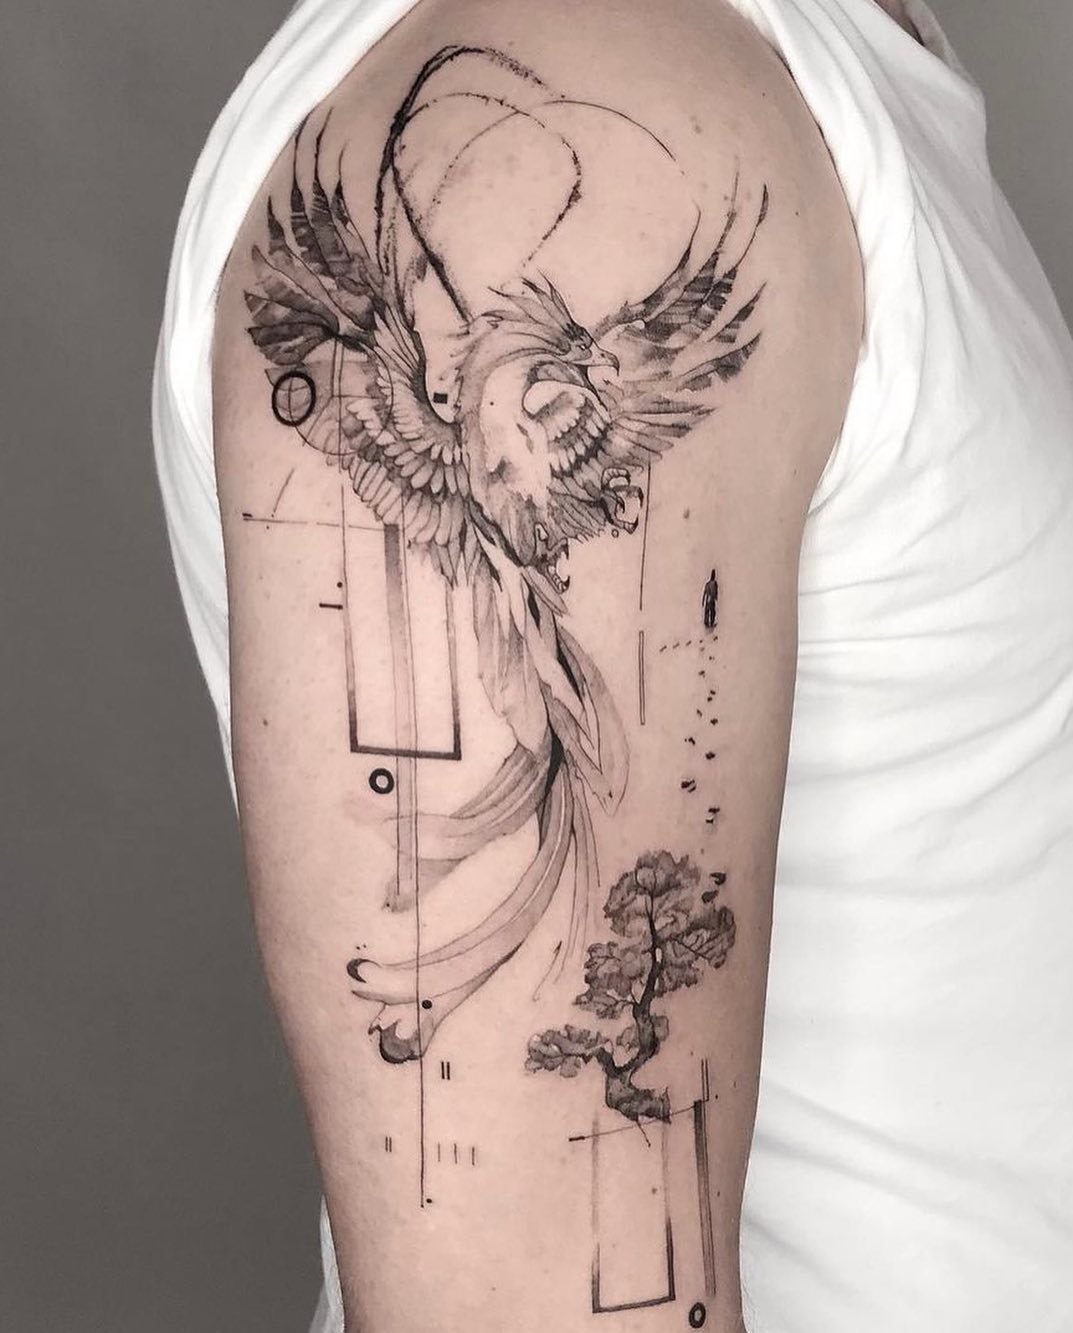 Phoenix tattoo on arm by hood.seven